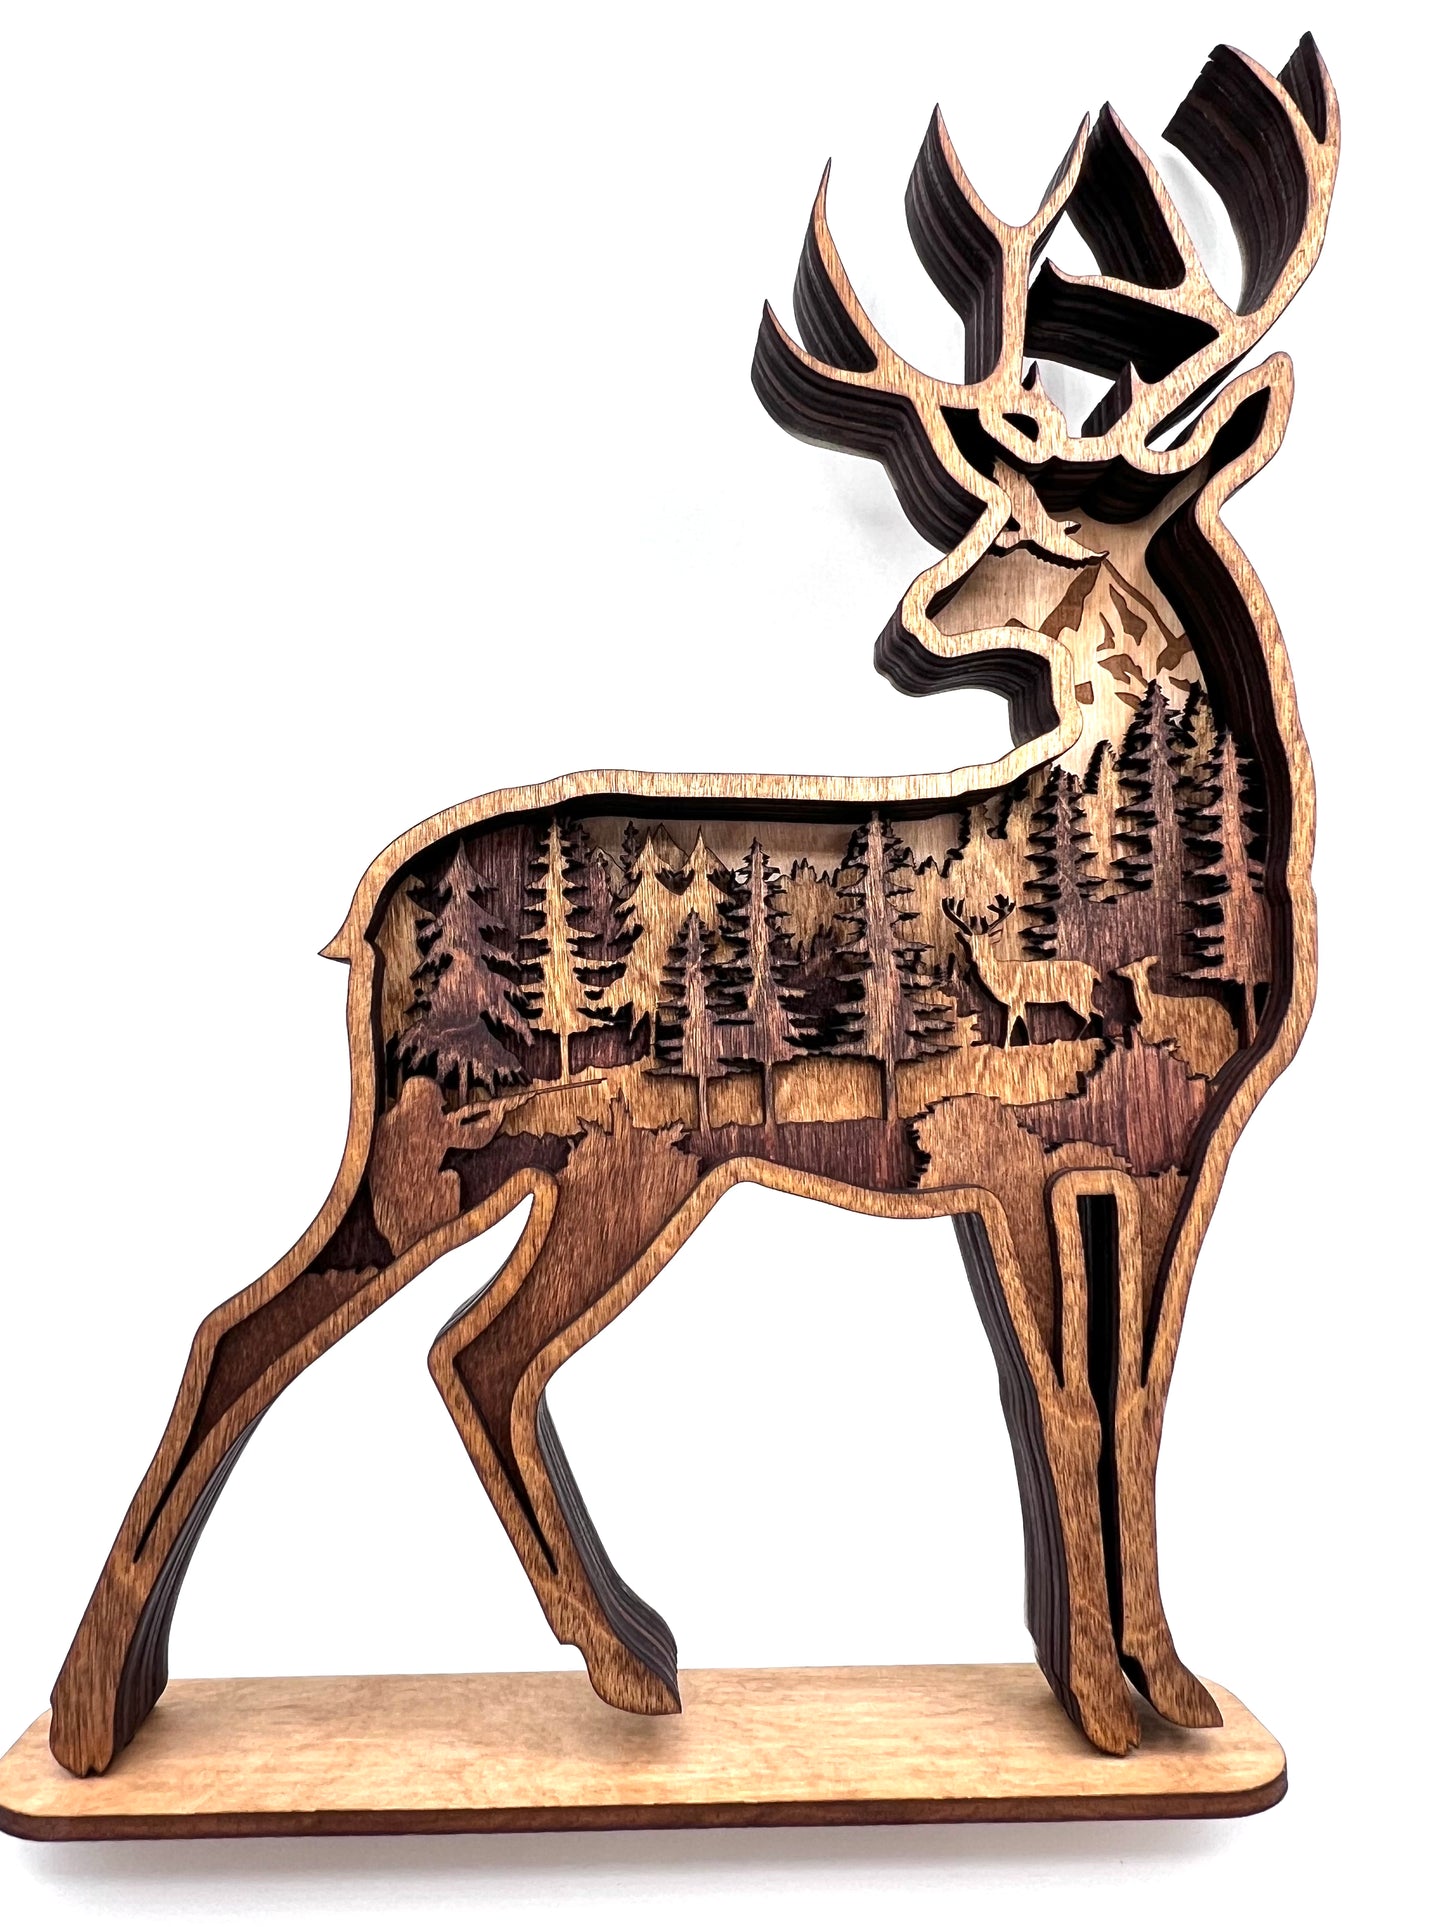 Deer Hunter, Tabletop Multi-Layer Wood